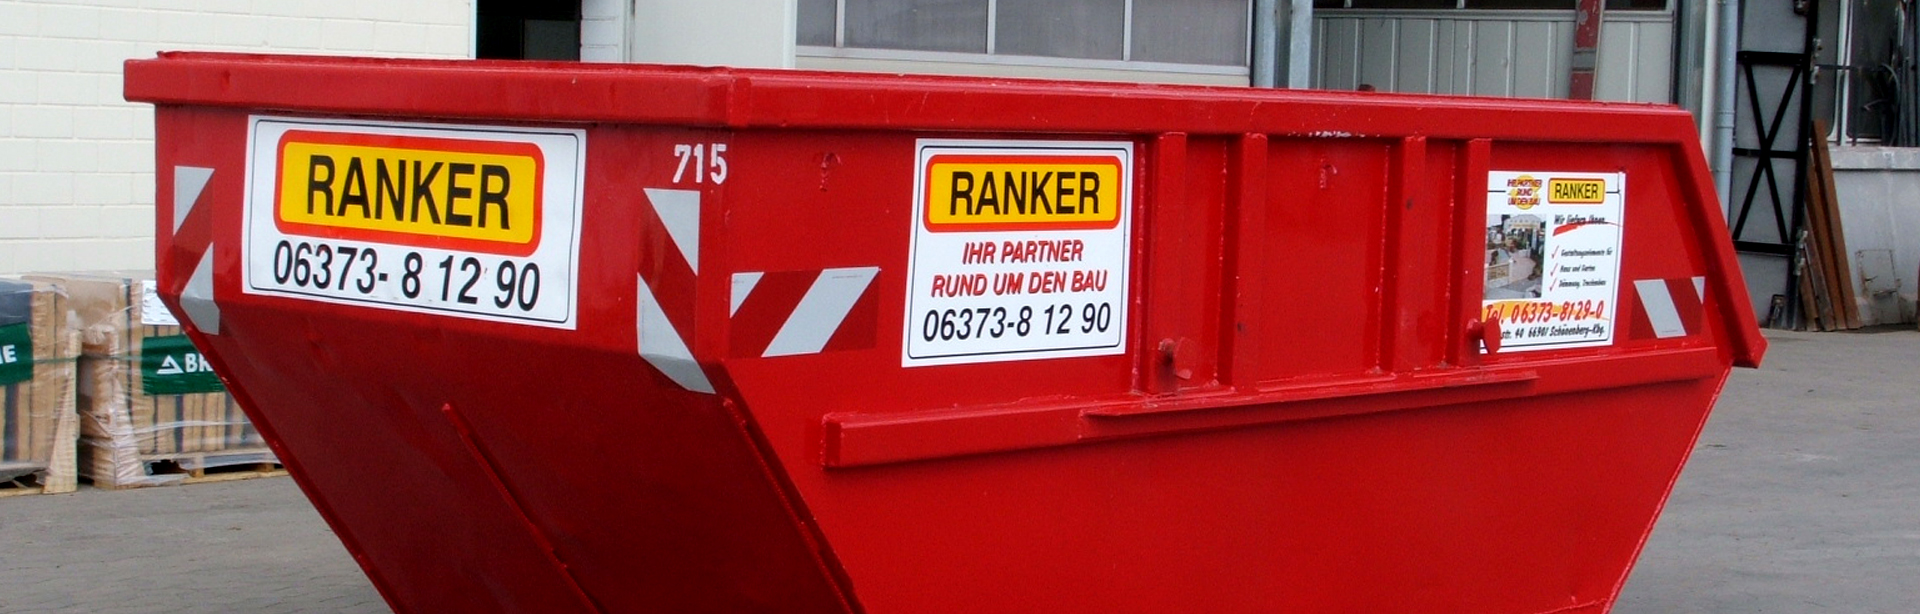 Ranker-GmbH-cont-gr-1.jpg